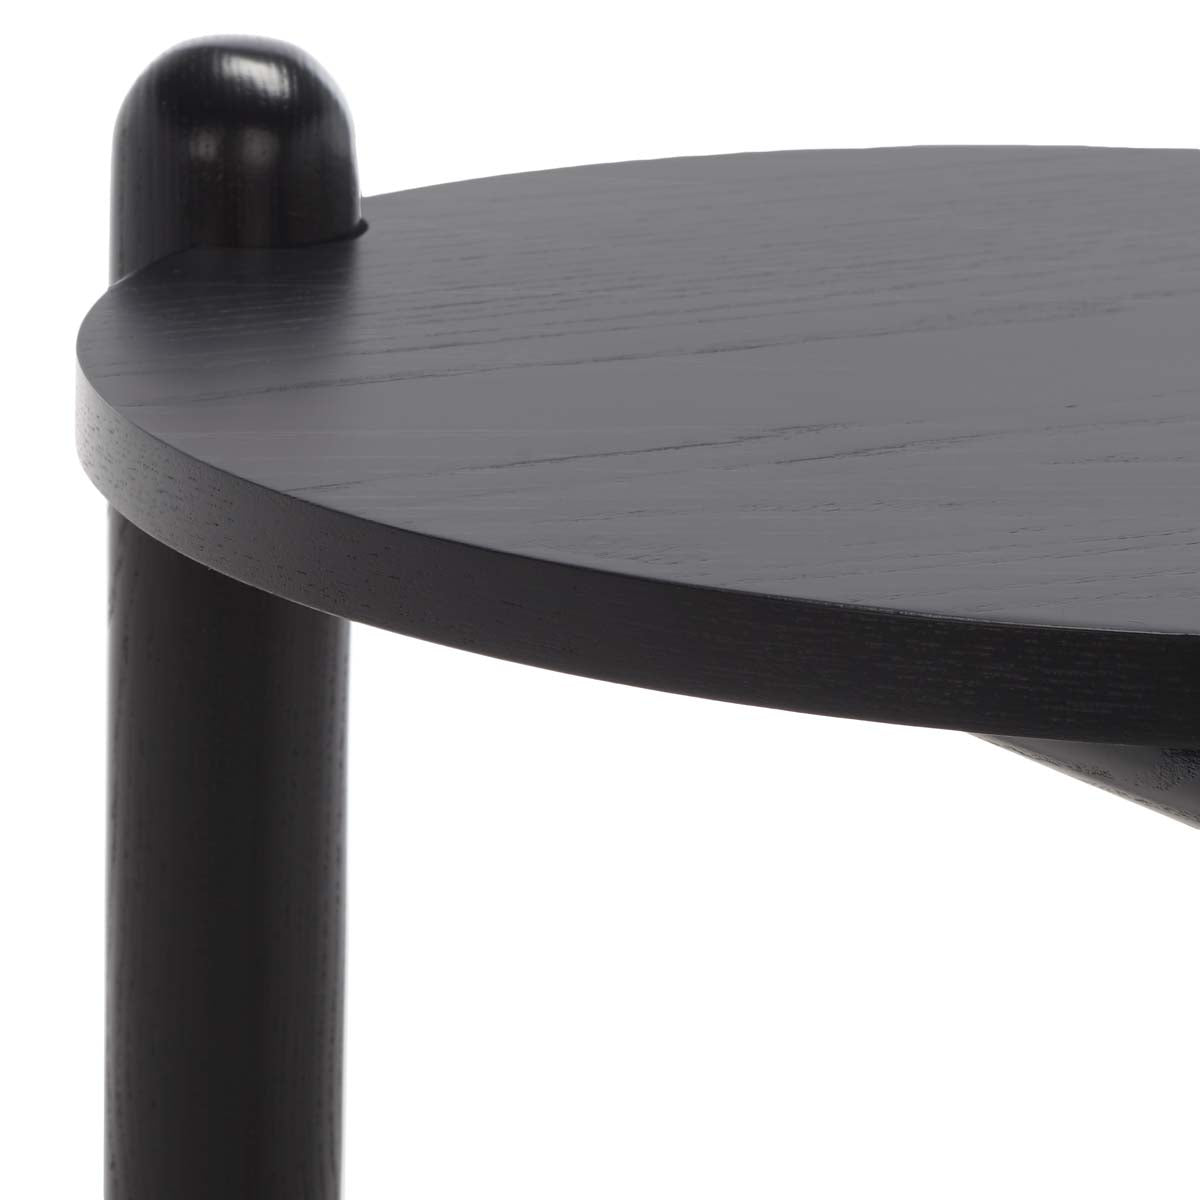 Safavieh Couture Macianna Woven Shelf Accent Table - Black